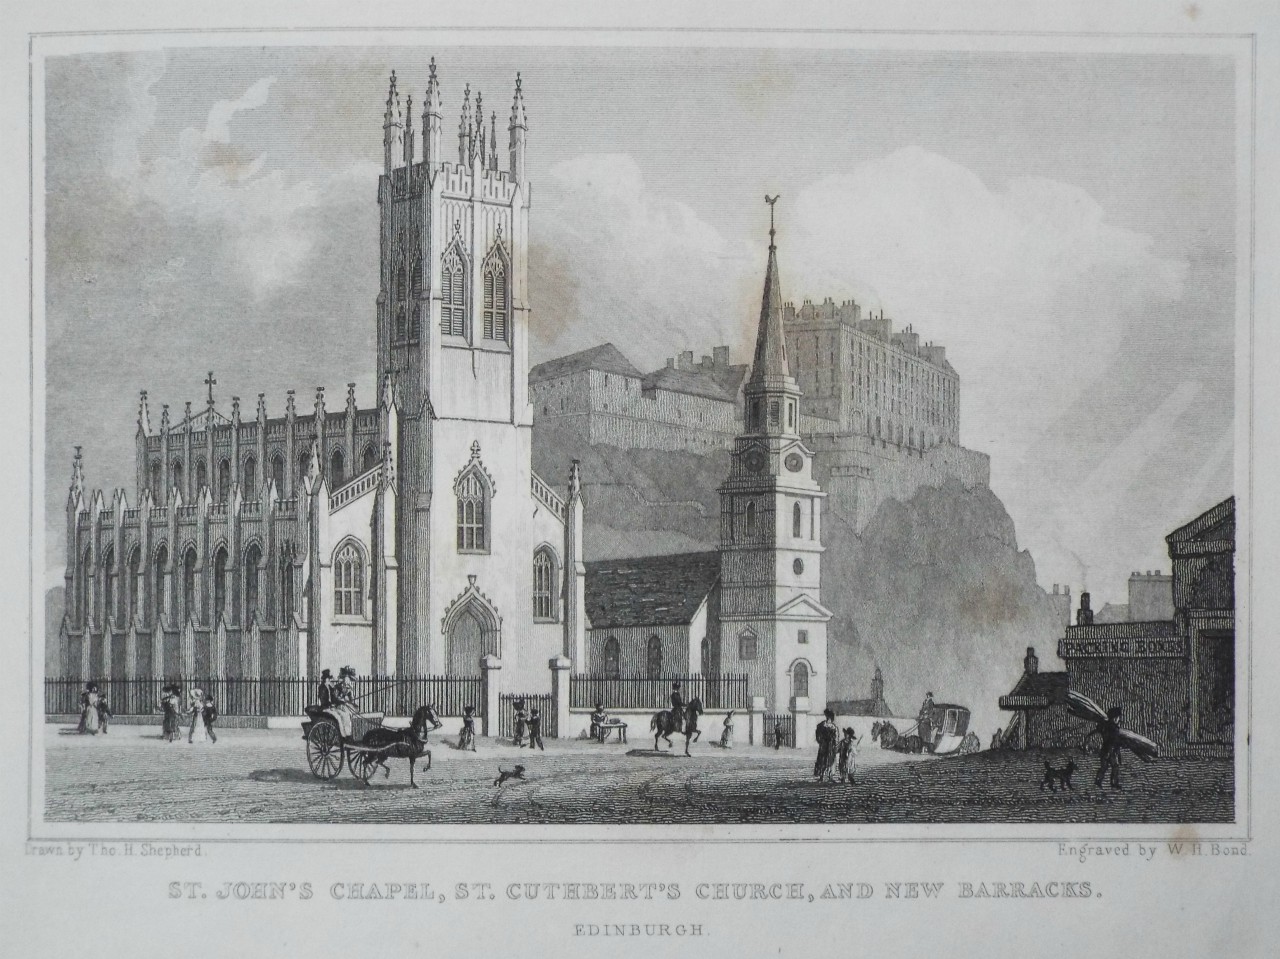 Print - St. John's Chapel, St. Cuthbert's Church, and New Barracks. Edinburgh. - Bond